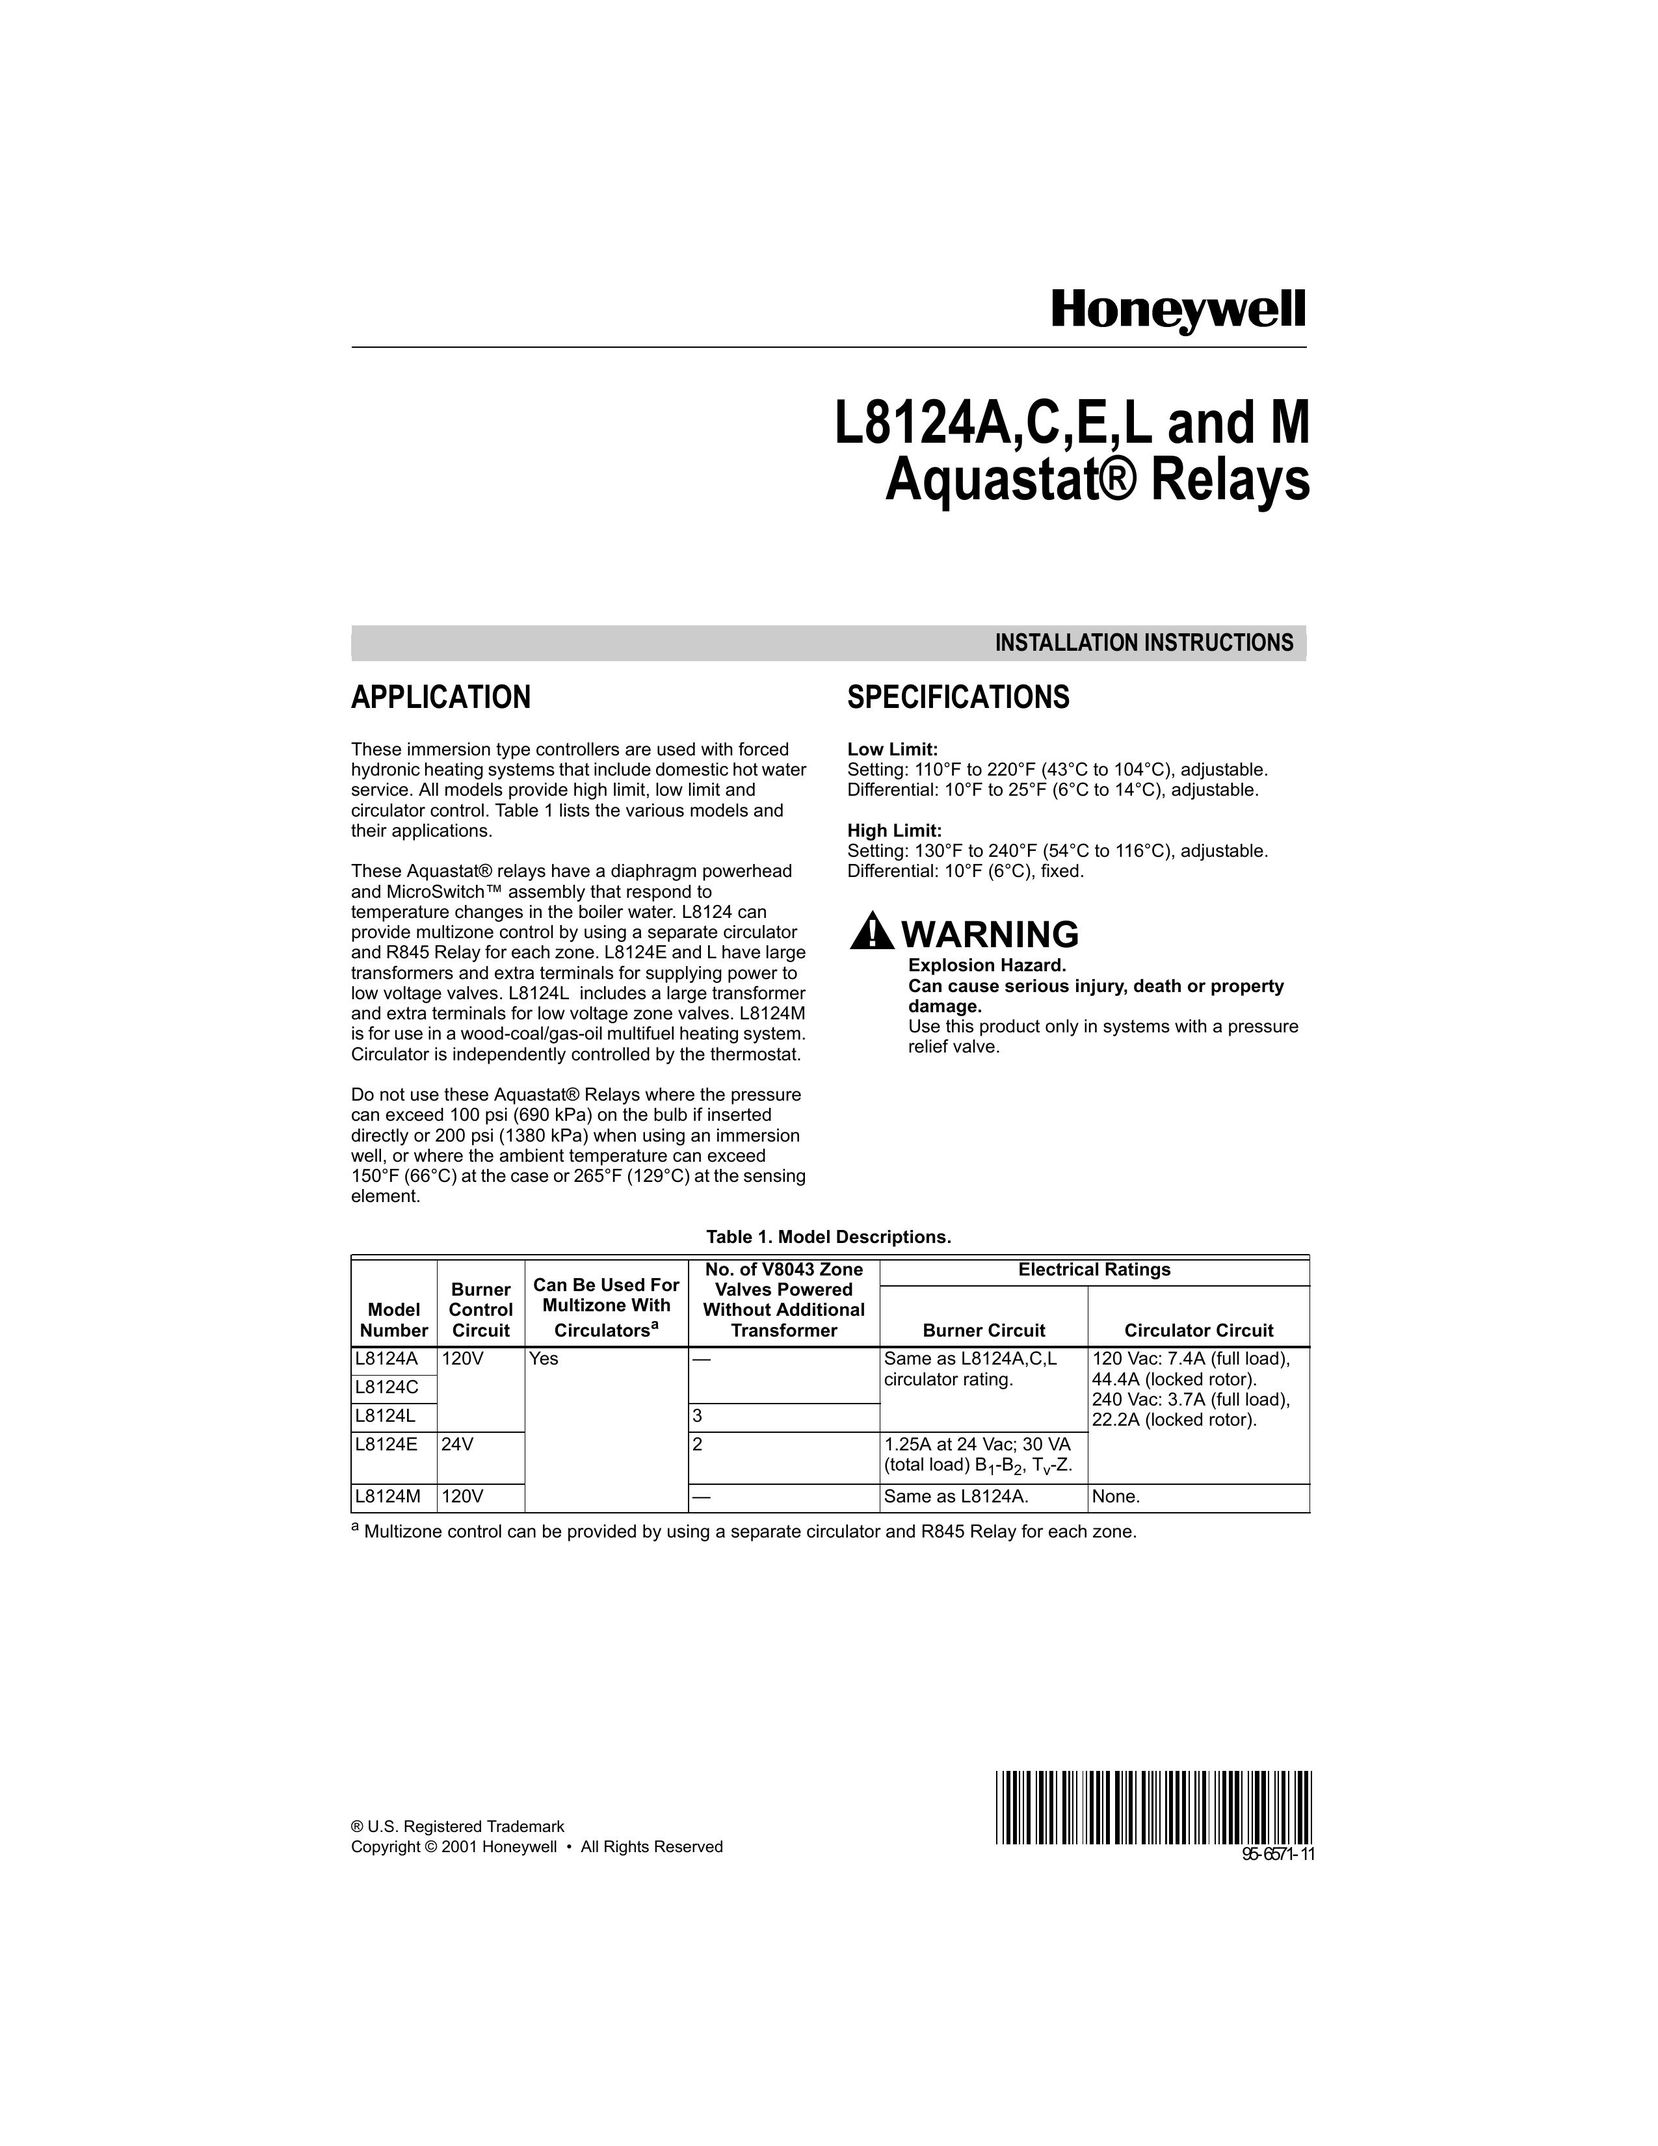 Honeywell L8124C Heating System User Manual